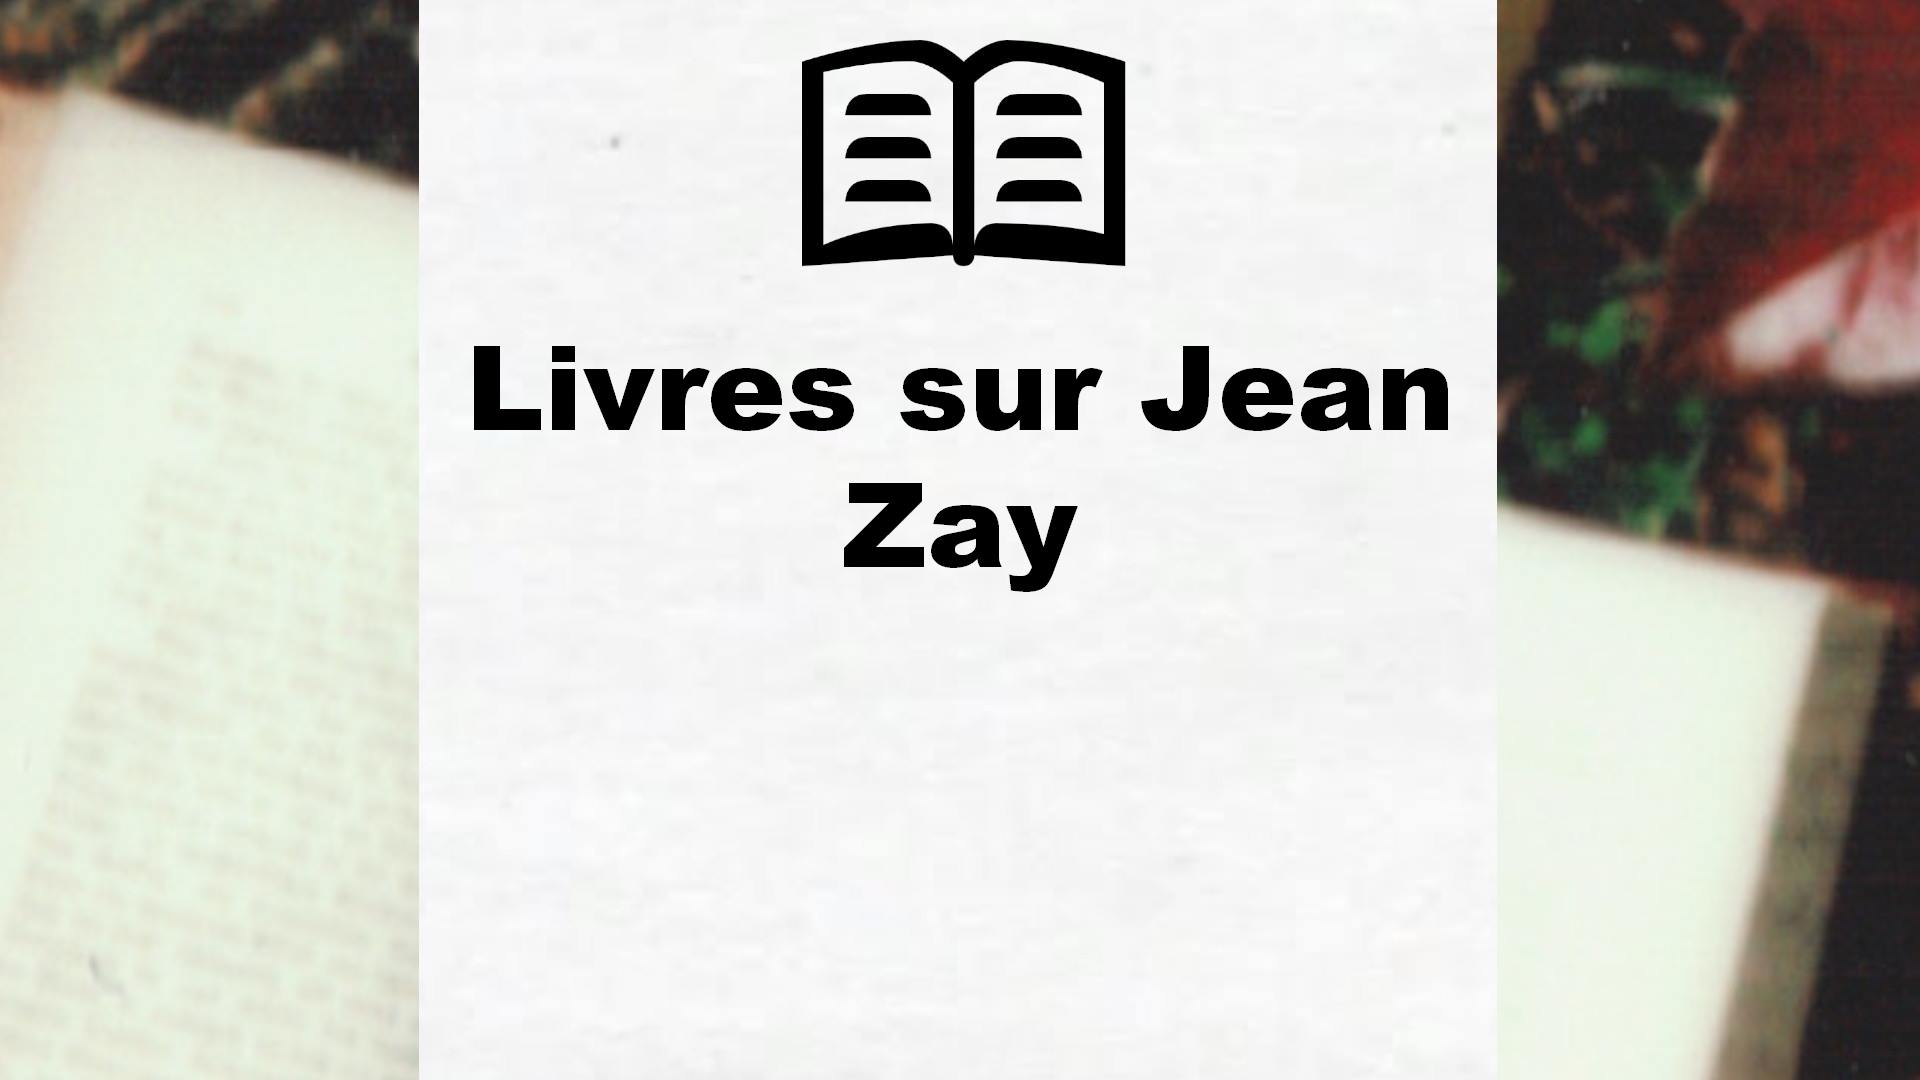 Livres sur Jean Zay